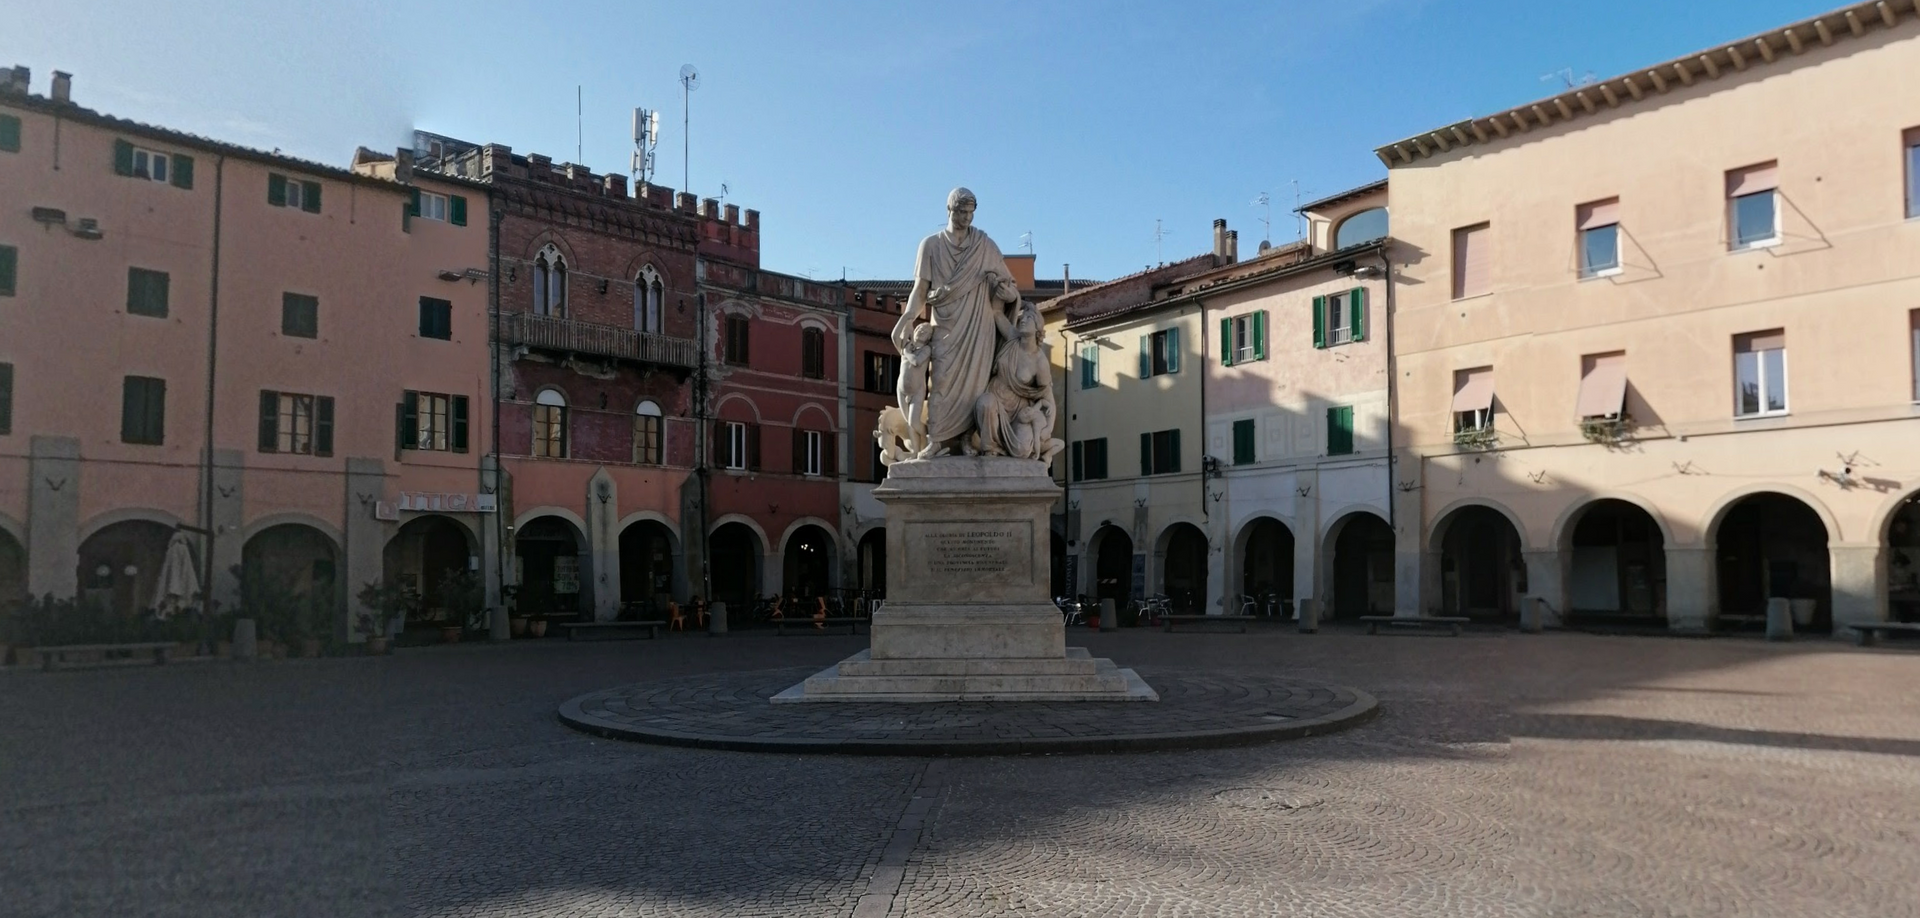 Piazza Dante by Google Earth